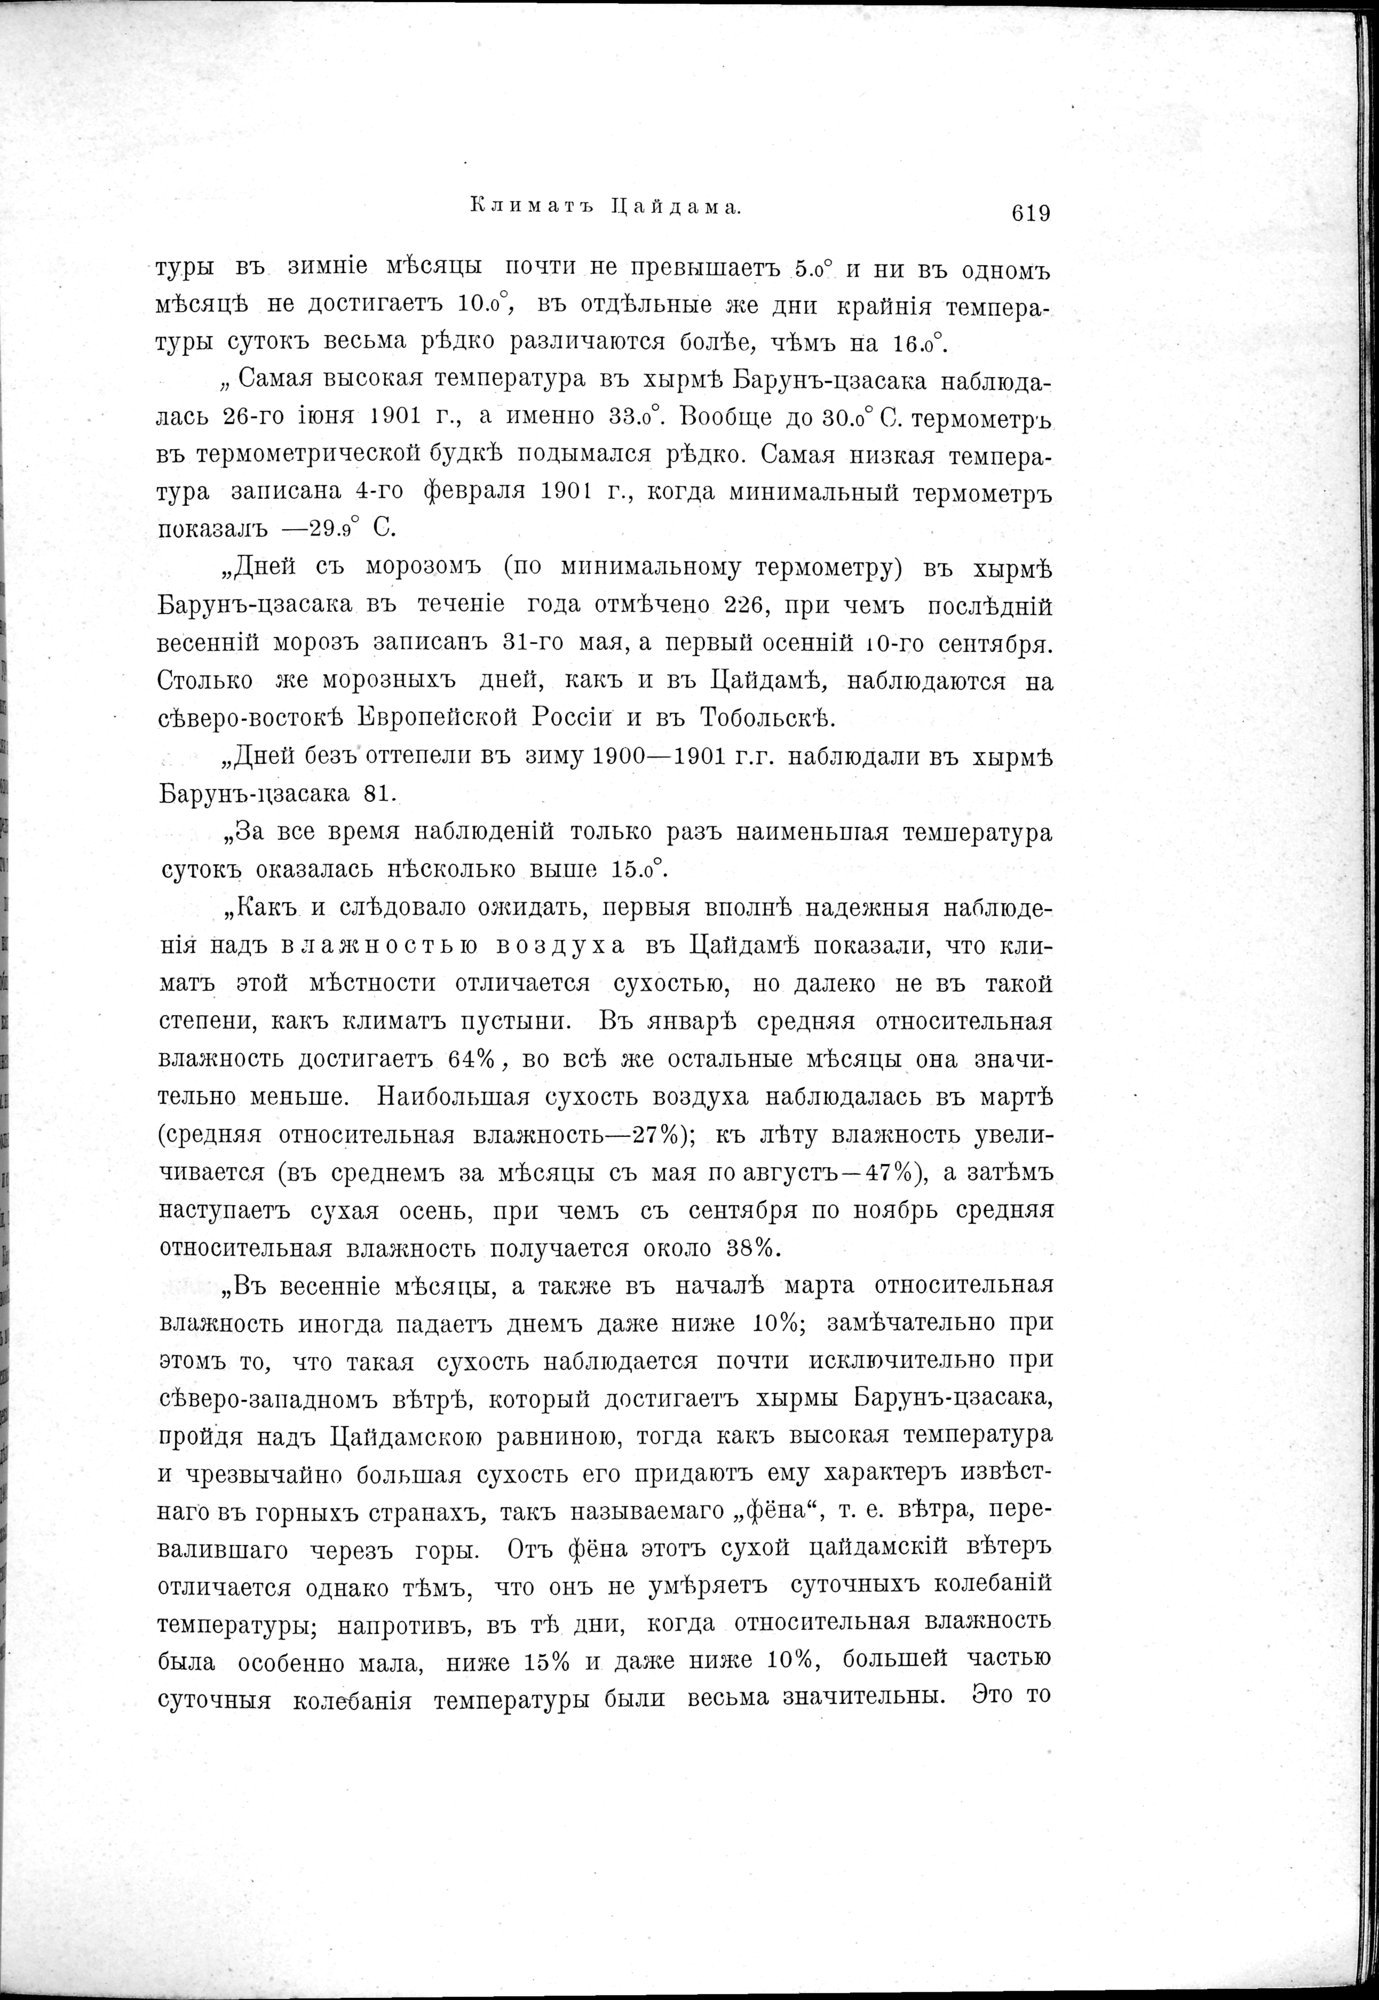 Mongoliia i Kam : vol.2 / Page 447 (Grayscale High Resolution Image)